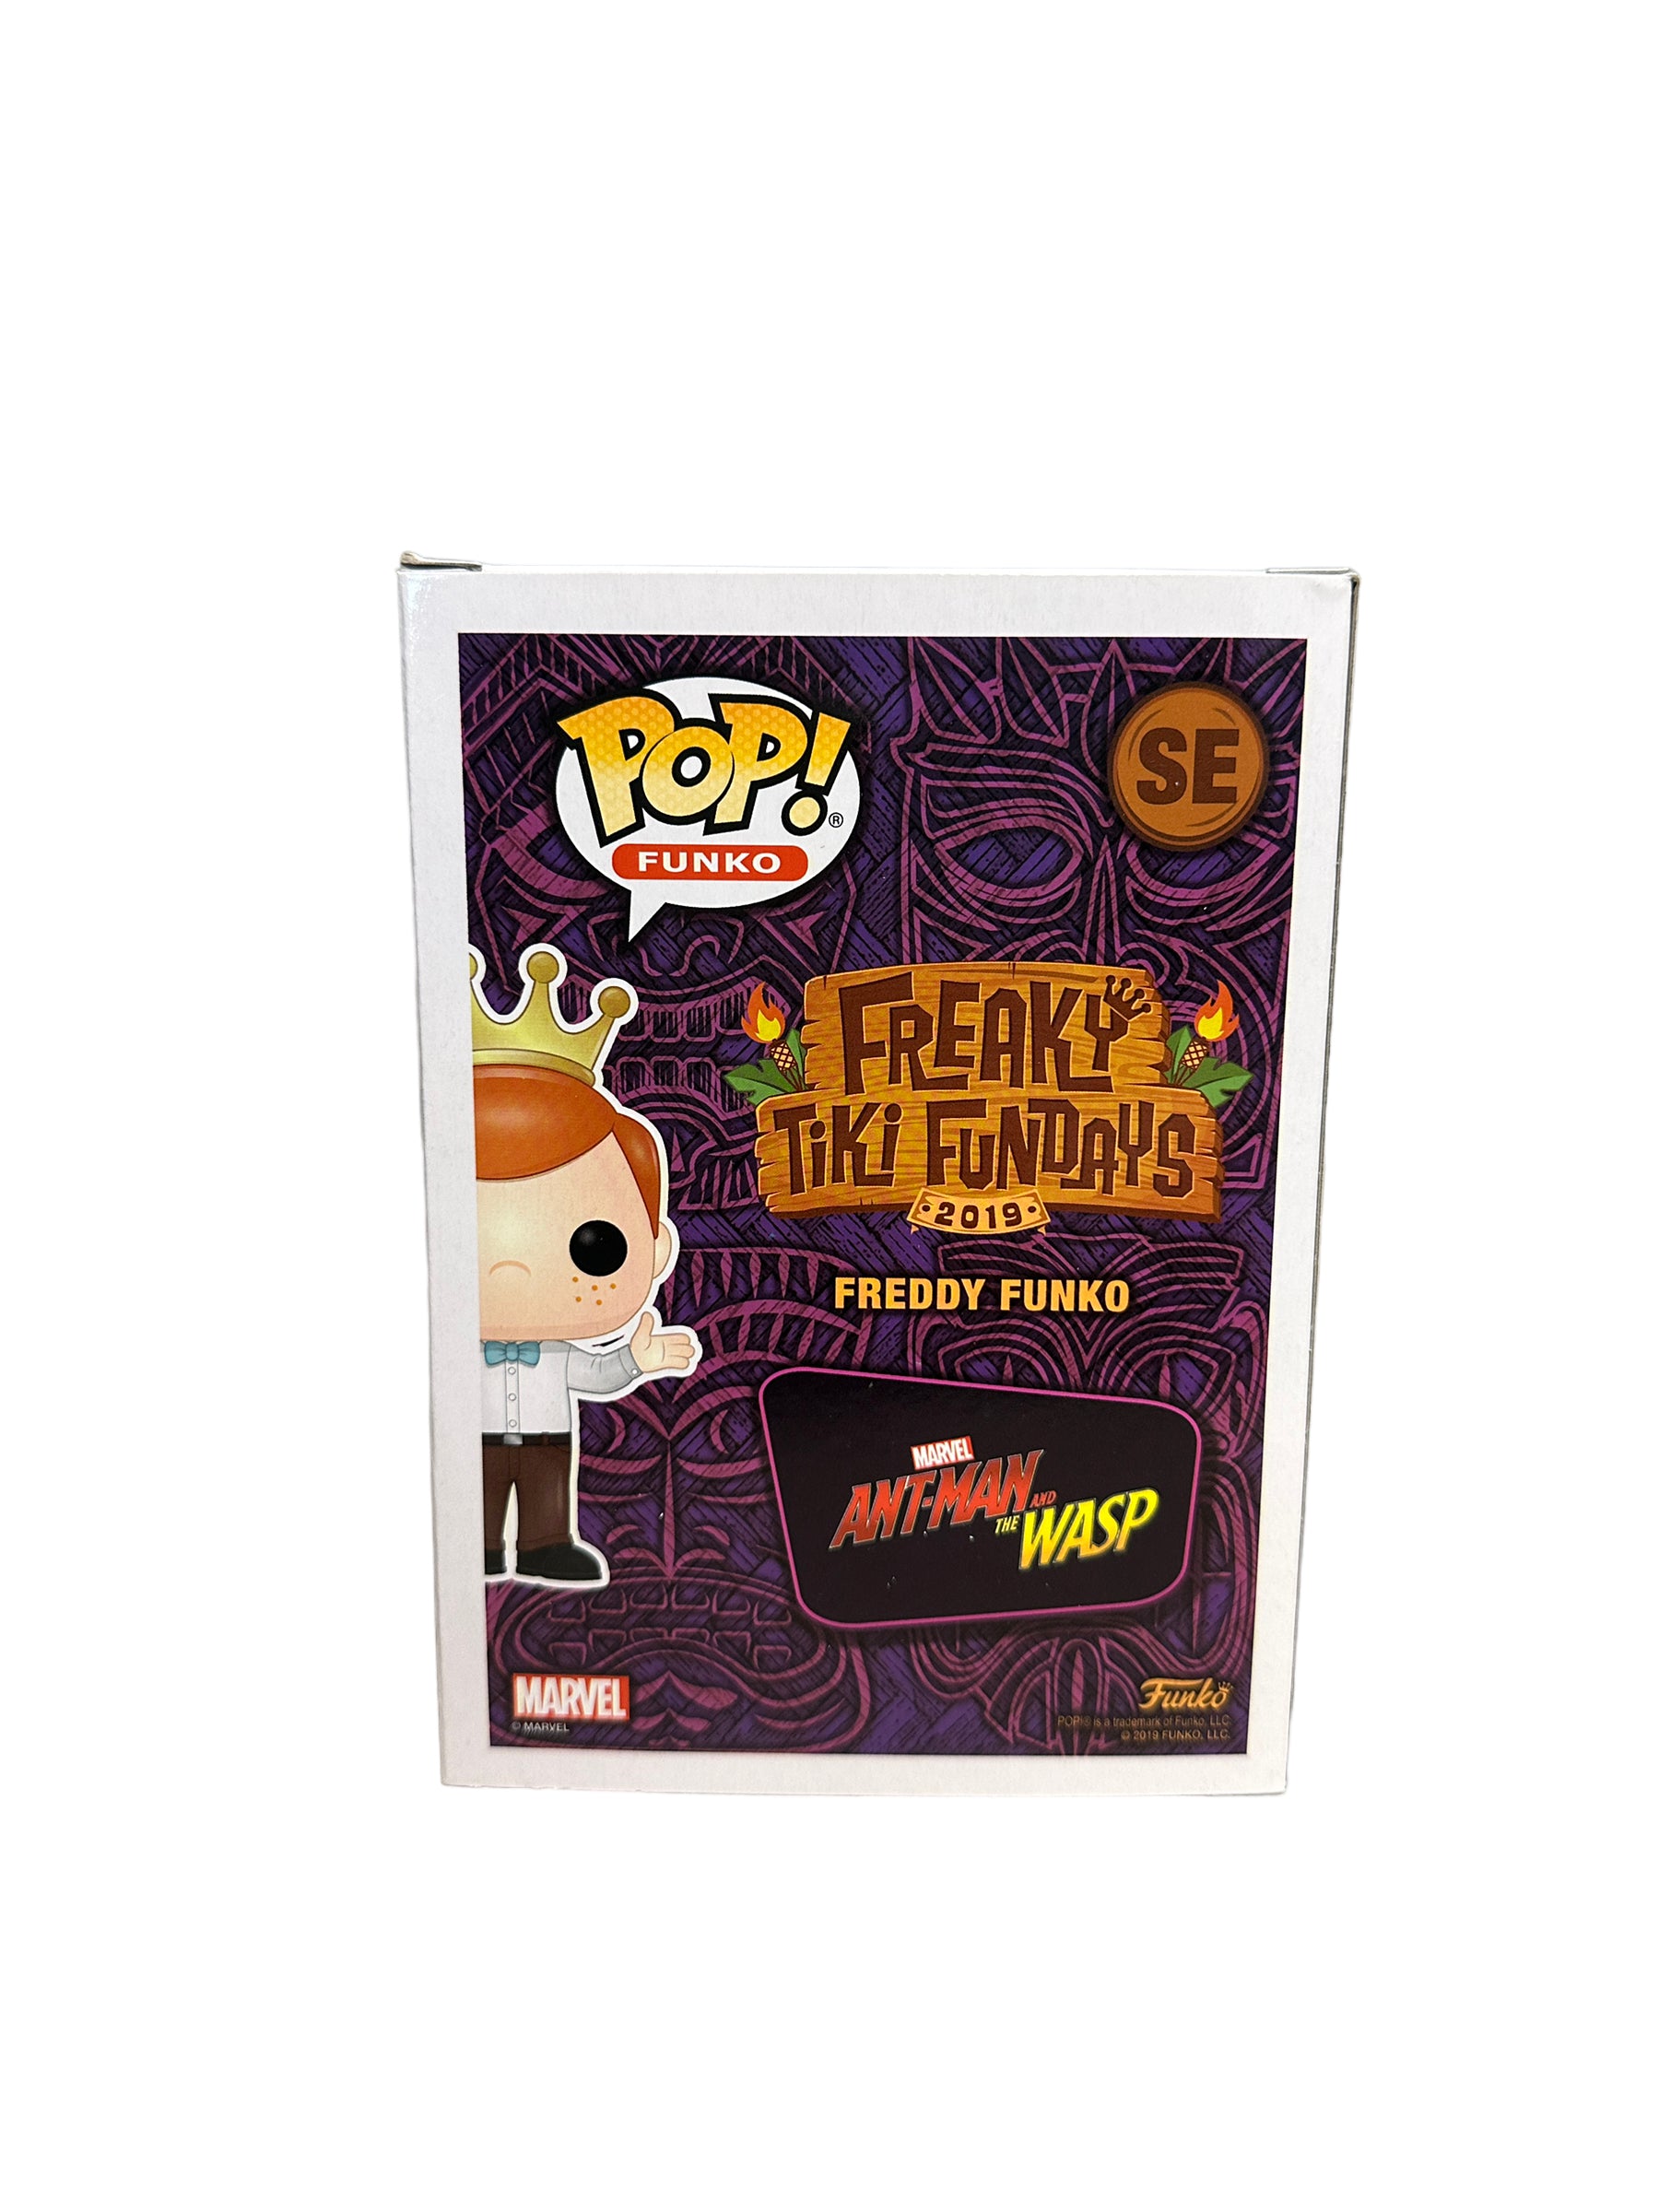 Freddy Funko as Ant-Man Funko Pop! - SDCC 2019 Exclusive LE350 Pcs - Condition 8.5/10